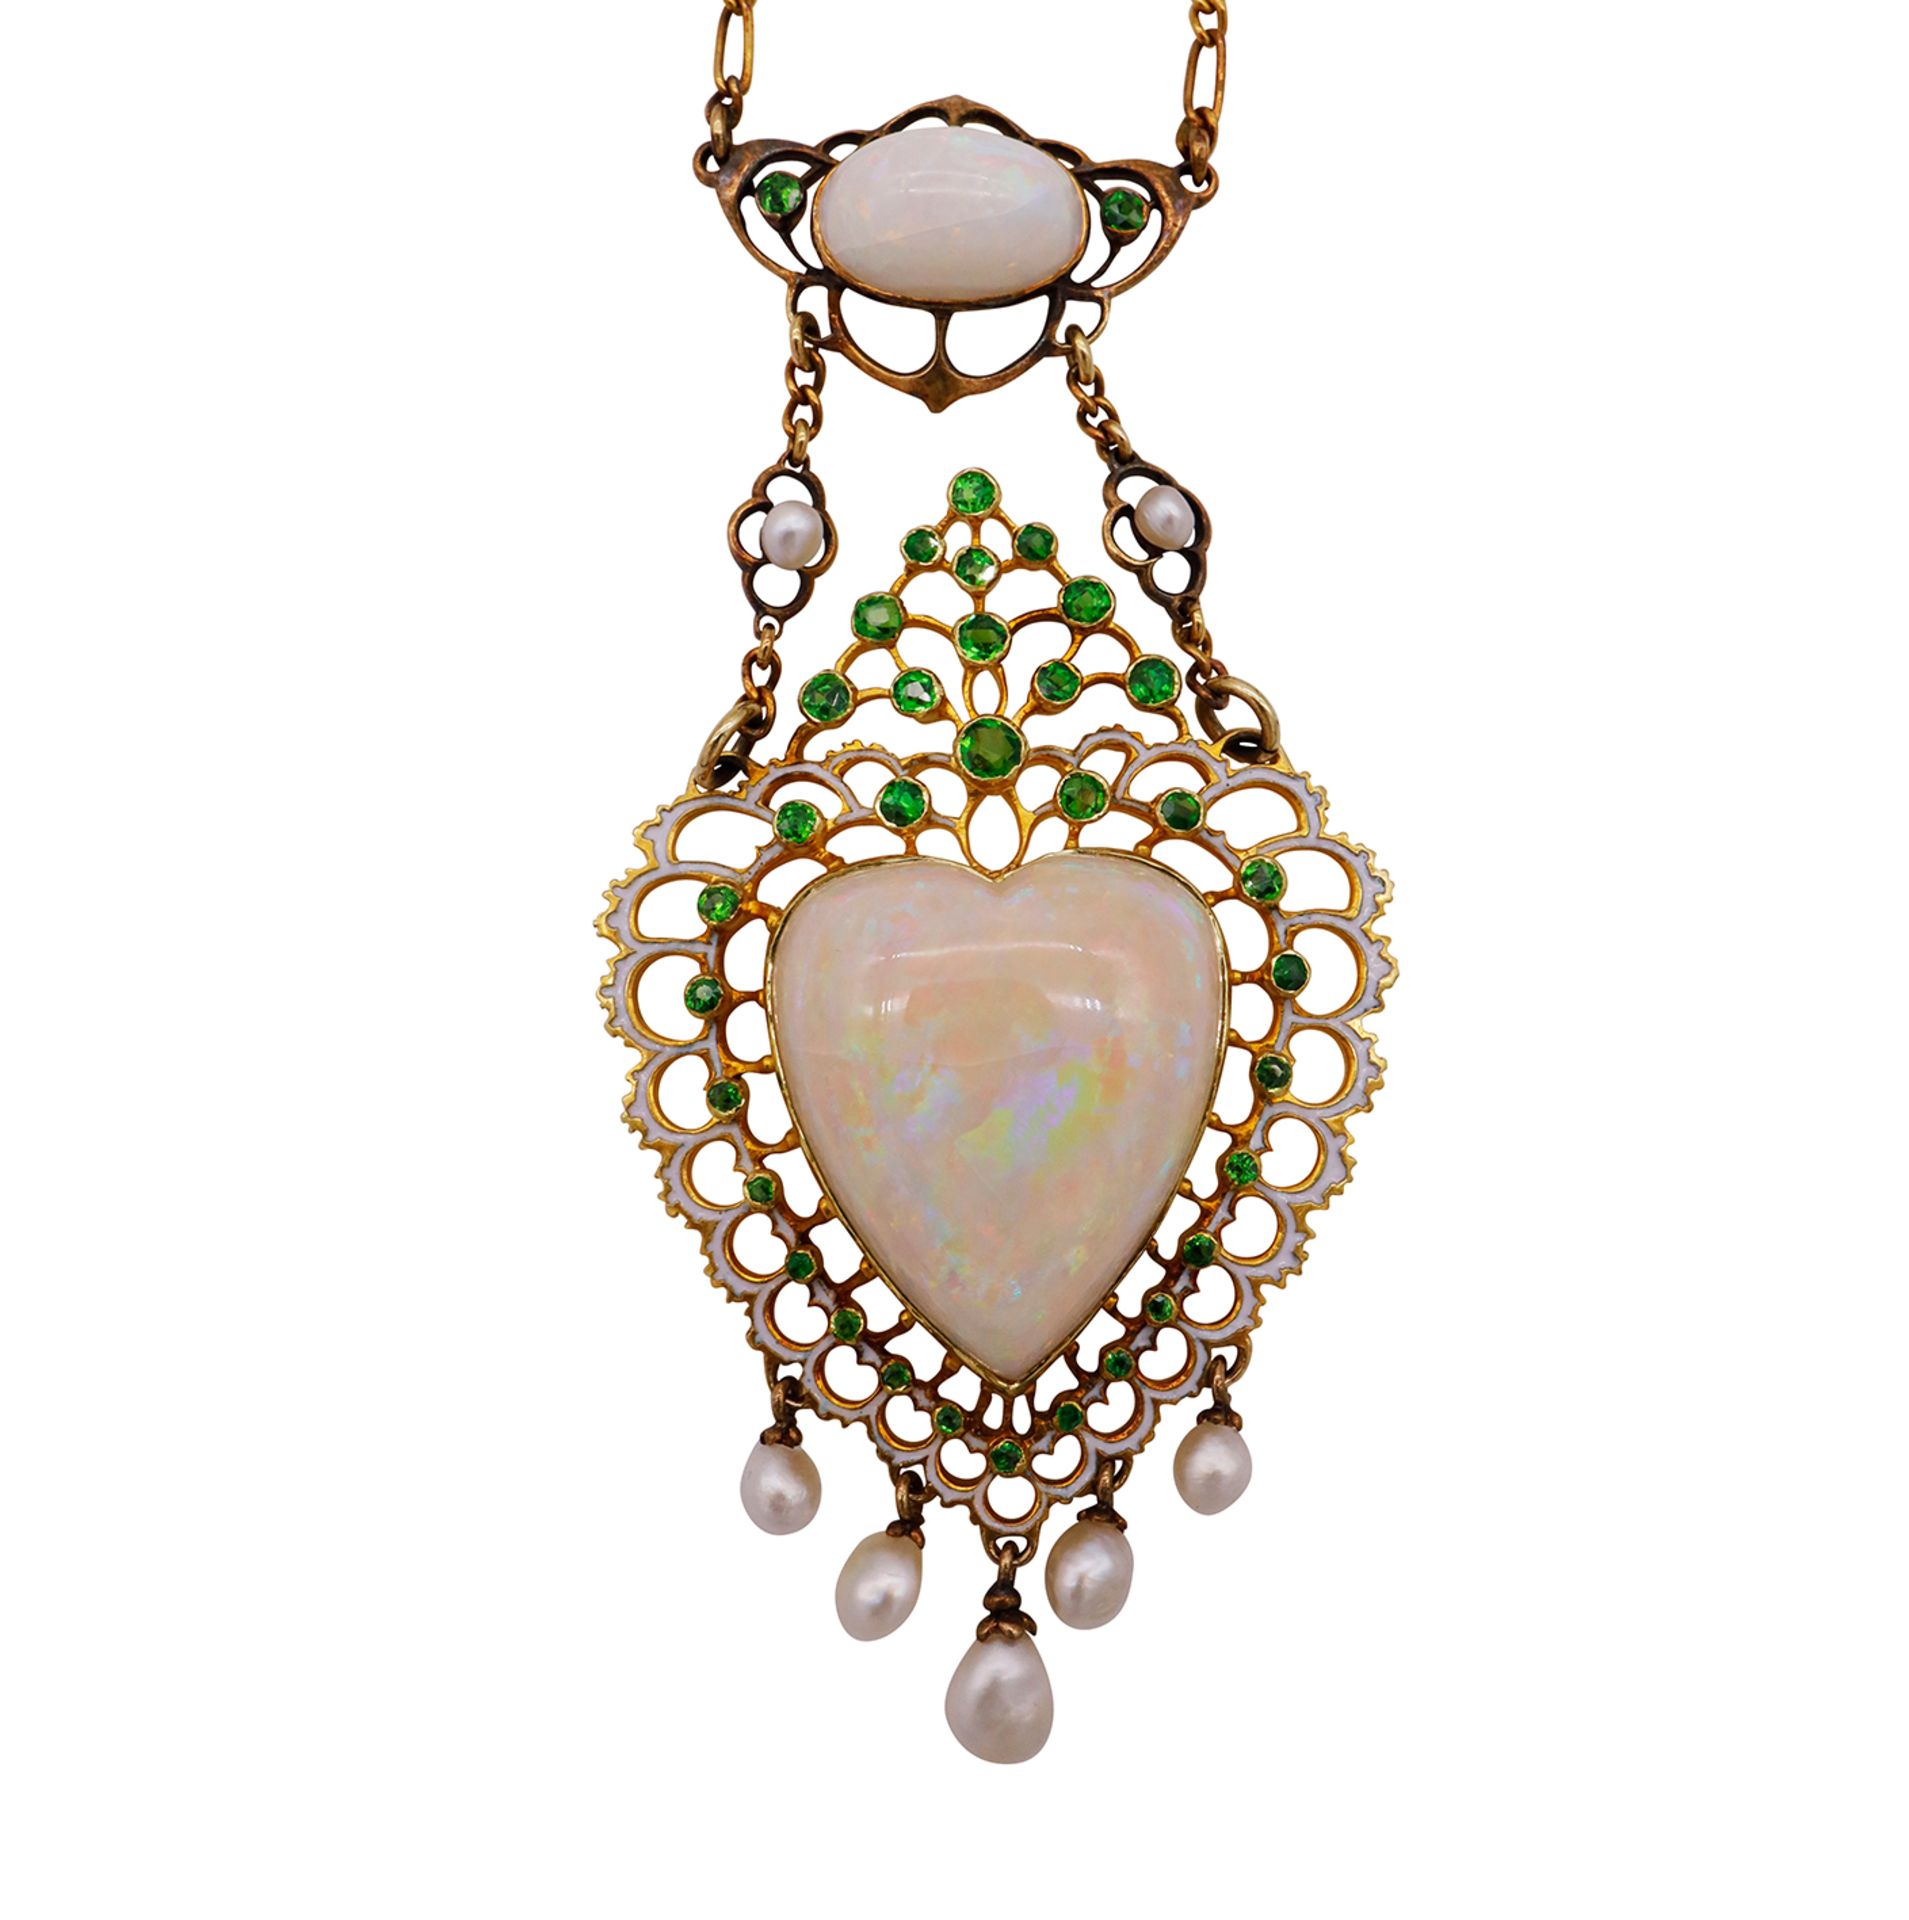 Collier Art Deco mit Opal-Anhänger